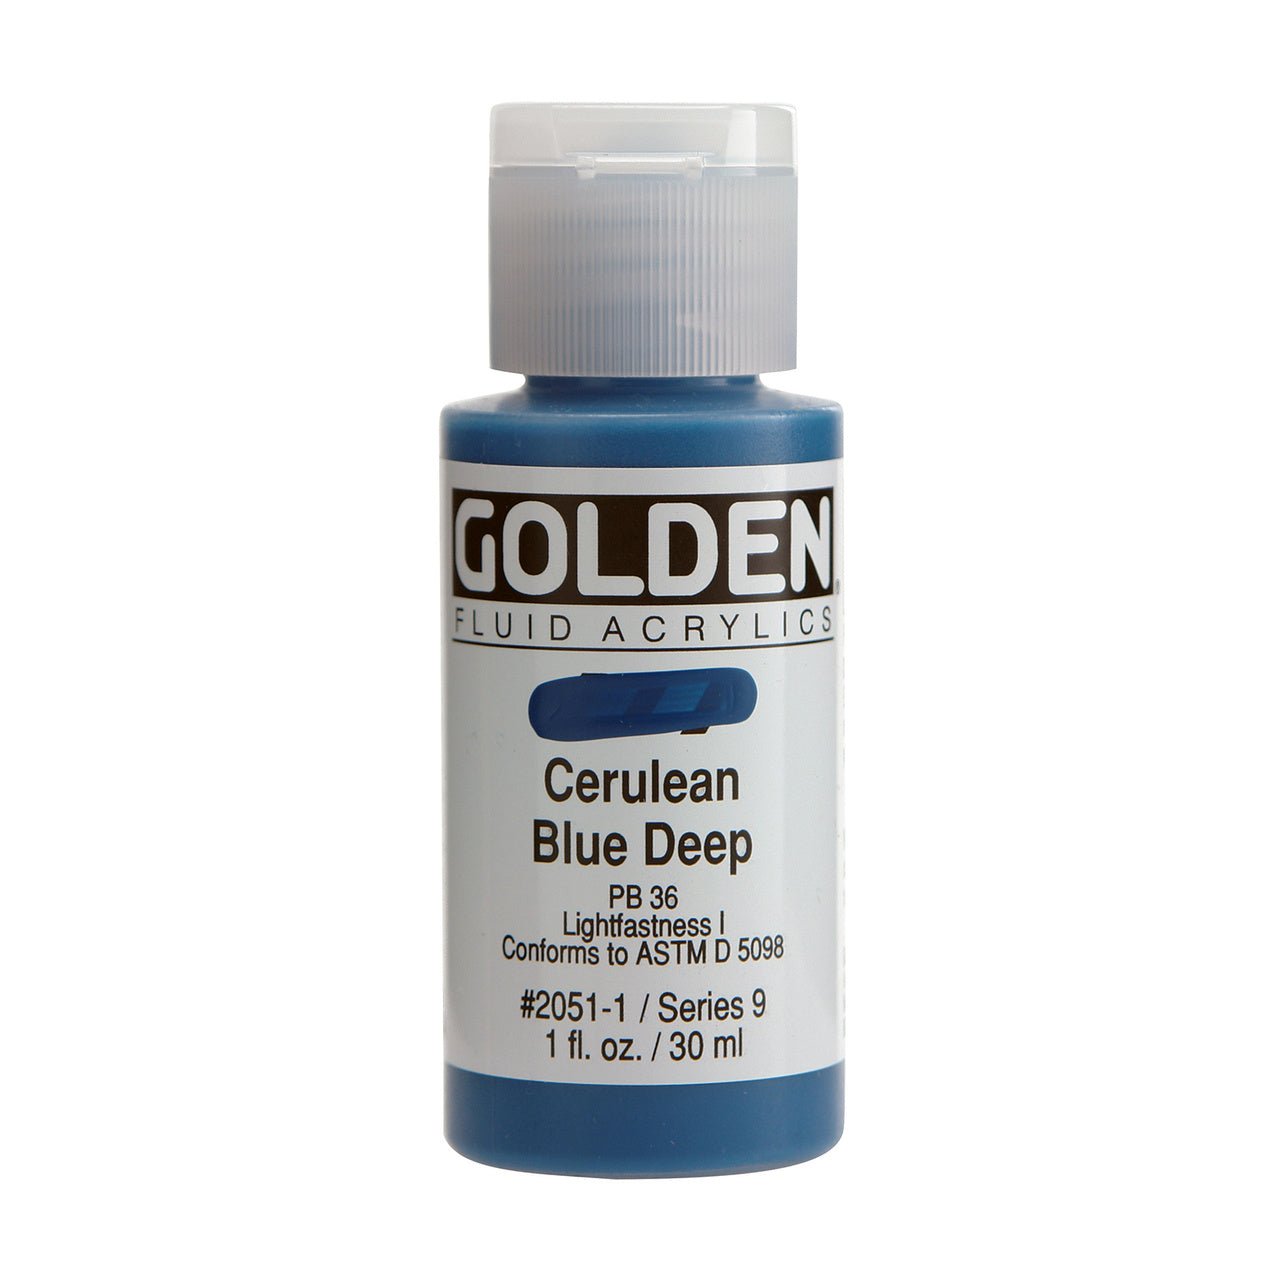 Golden Fluid Acrylic Cerulean Blue Deep 1 oz - merriartist.com